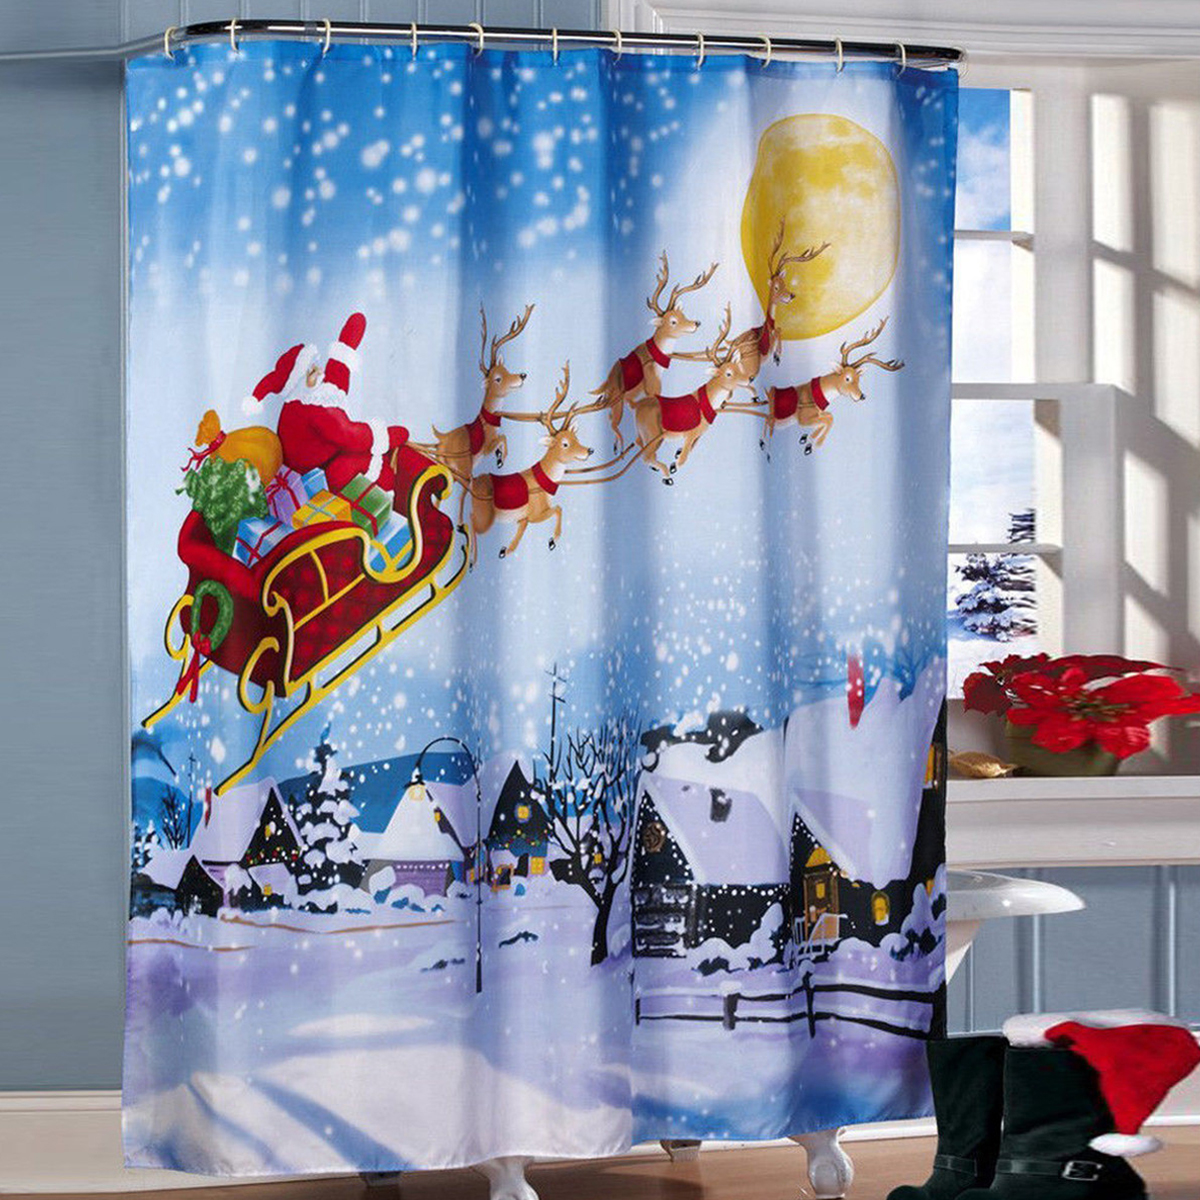 180x180cm-Christmas-Santa-Claus-Reindeer-Bathroom-Shower-Curtains-With-12-Hooks-1377854